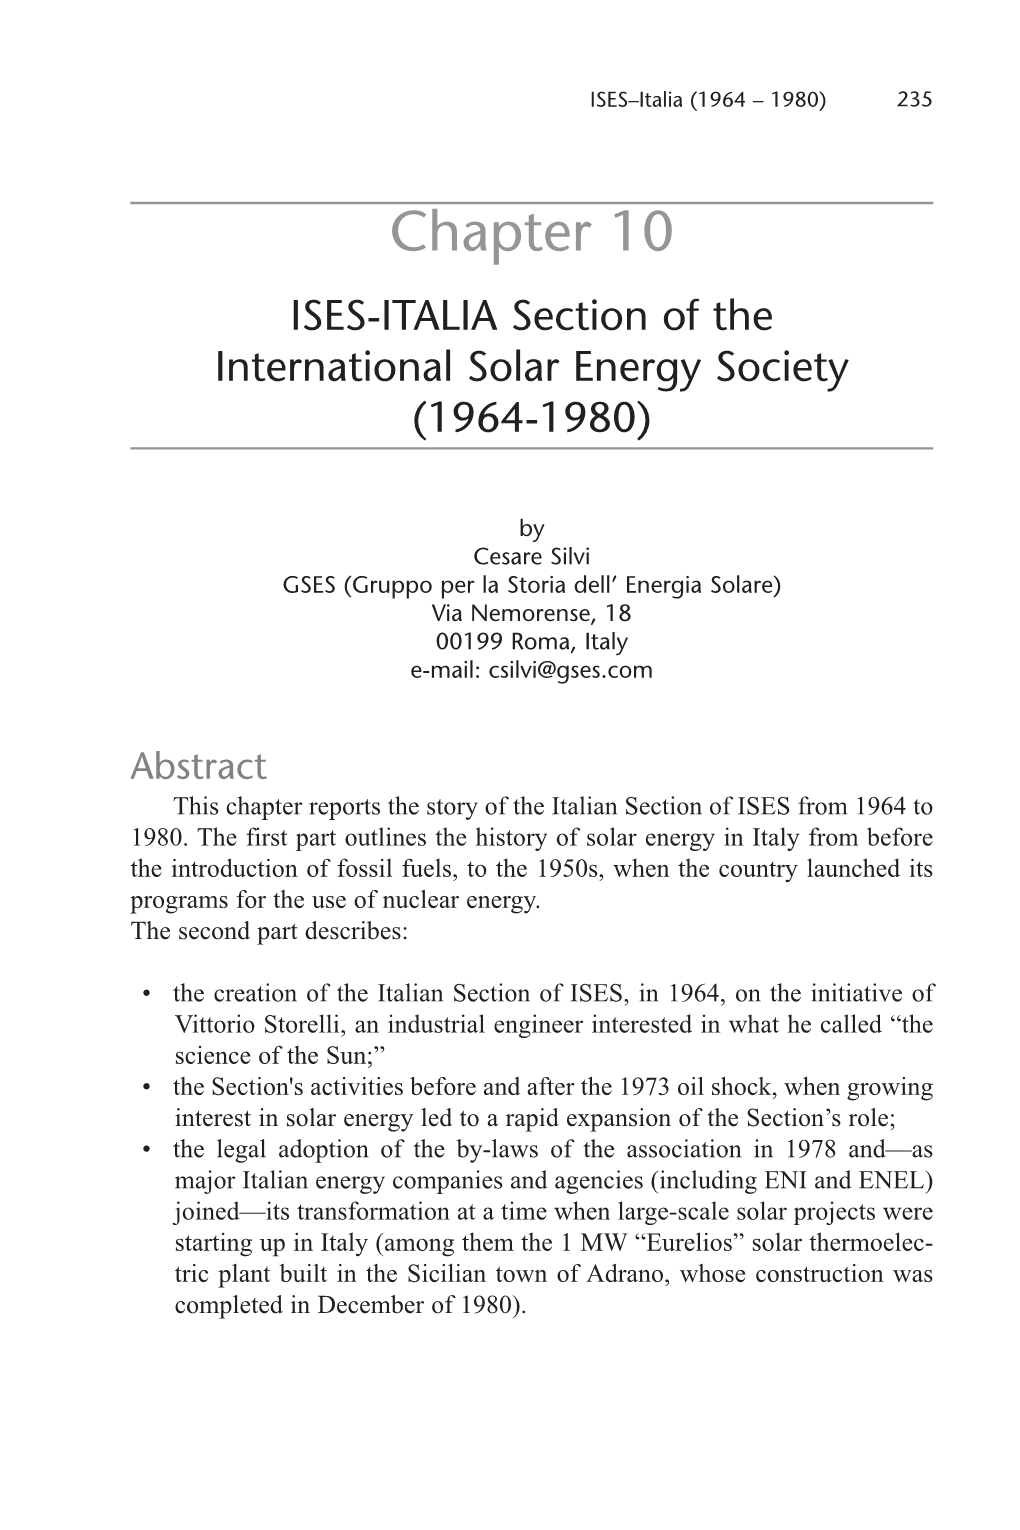 ISES-ITALIA Section of the International Solar Energy Society (1964-1980)